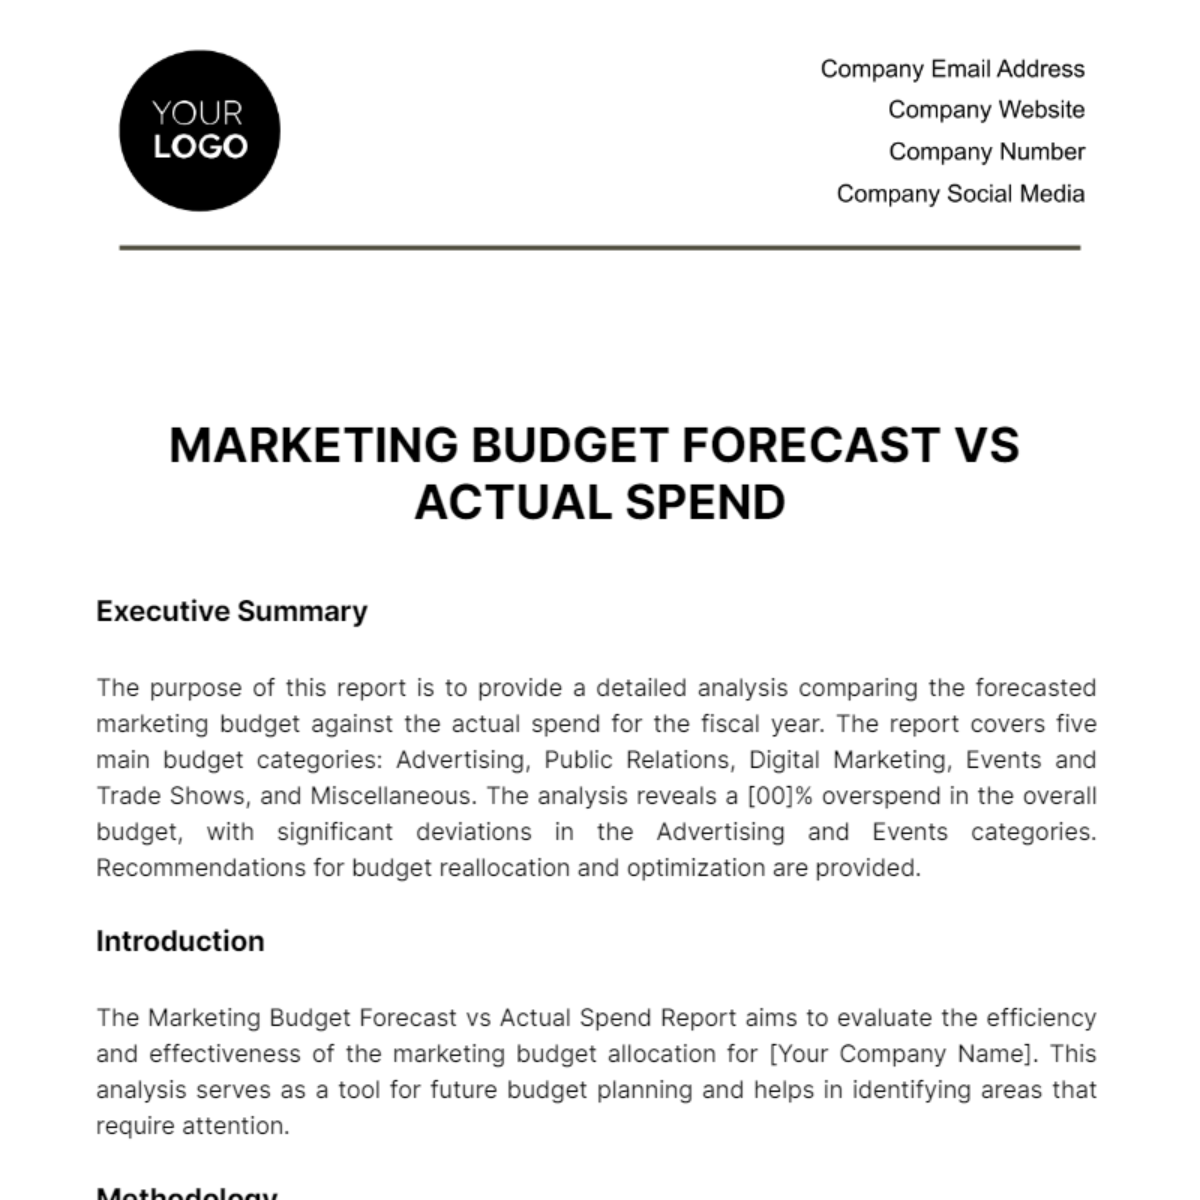 Free Marketing Budget Forecast vs Actual Spend Template